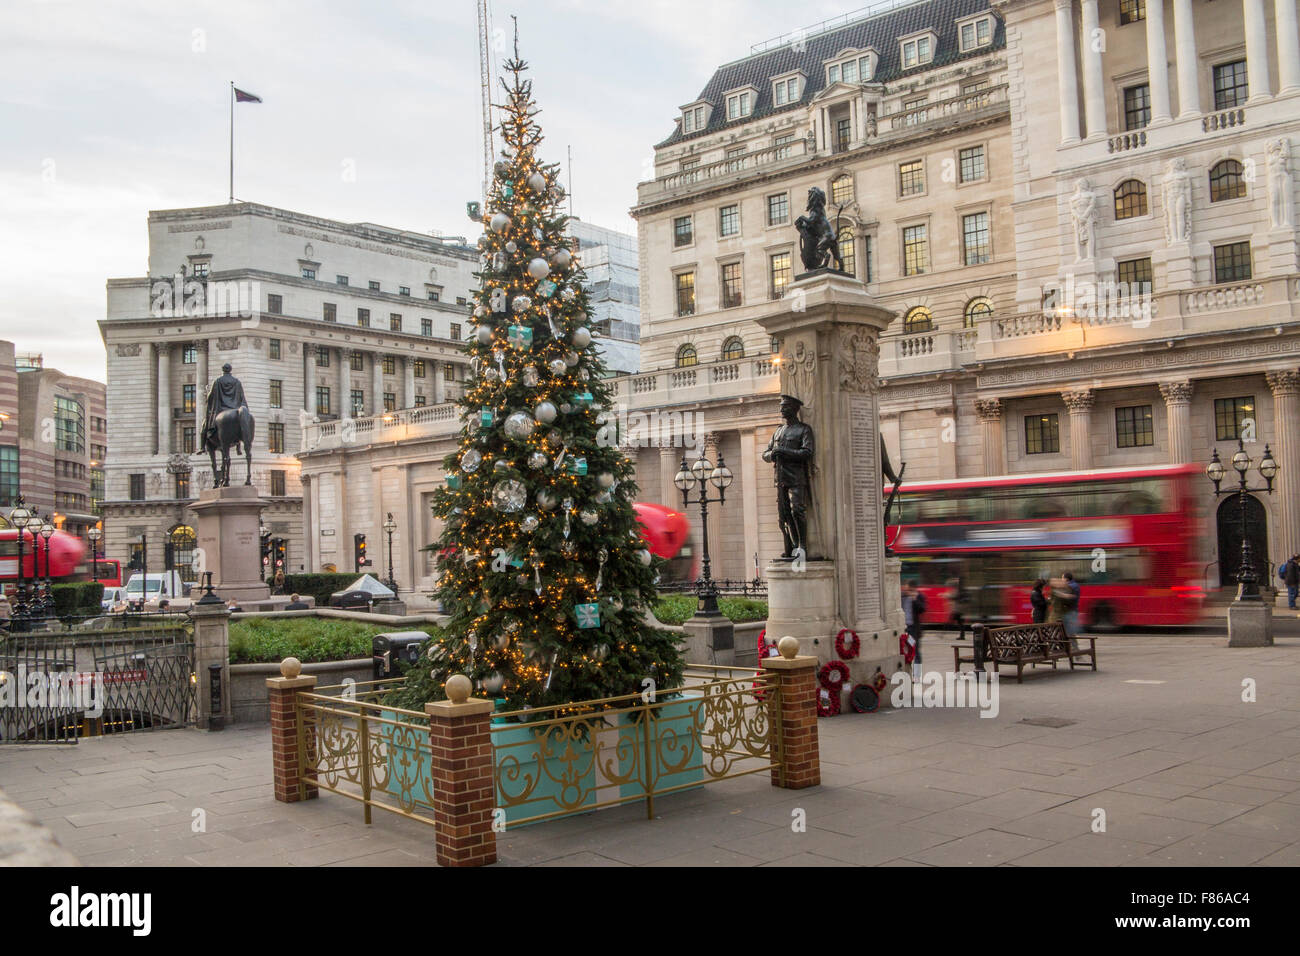 A Christmas tree at Bank Tube Station outside The Royal Exchange Stock Photo